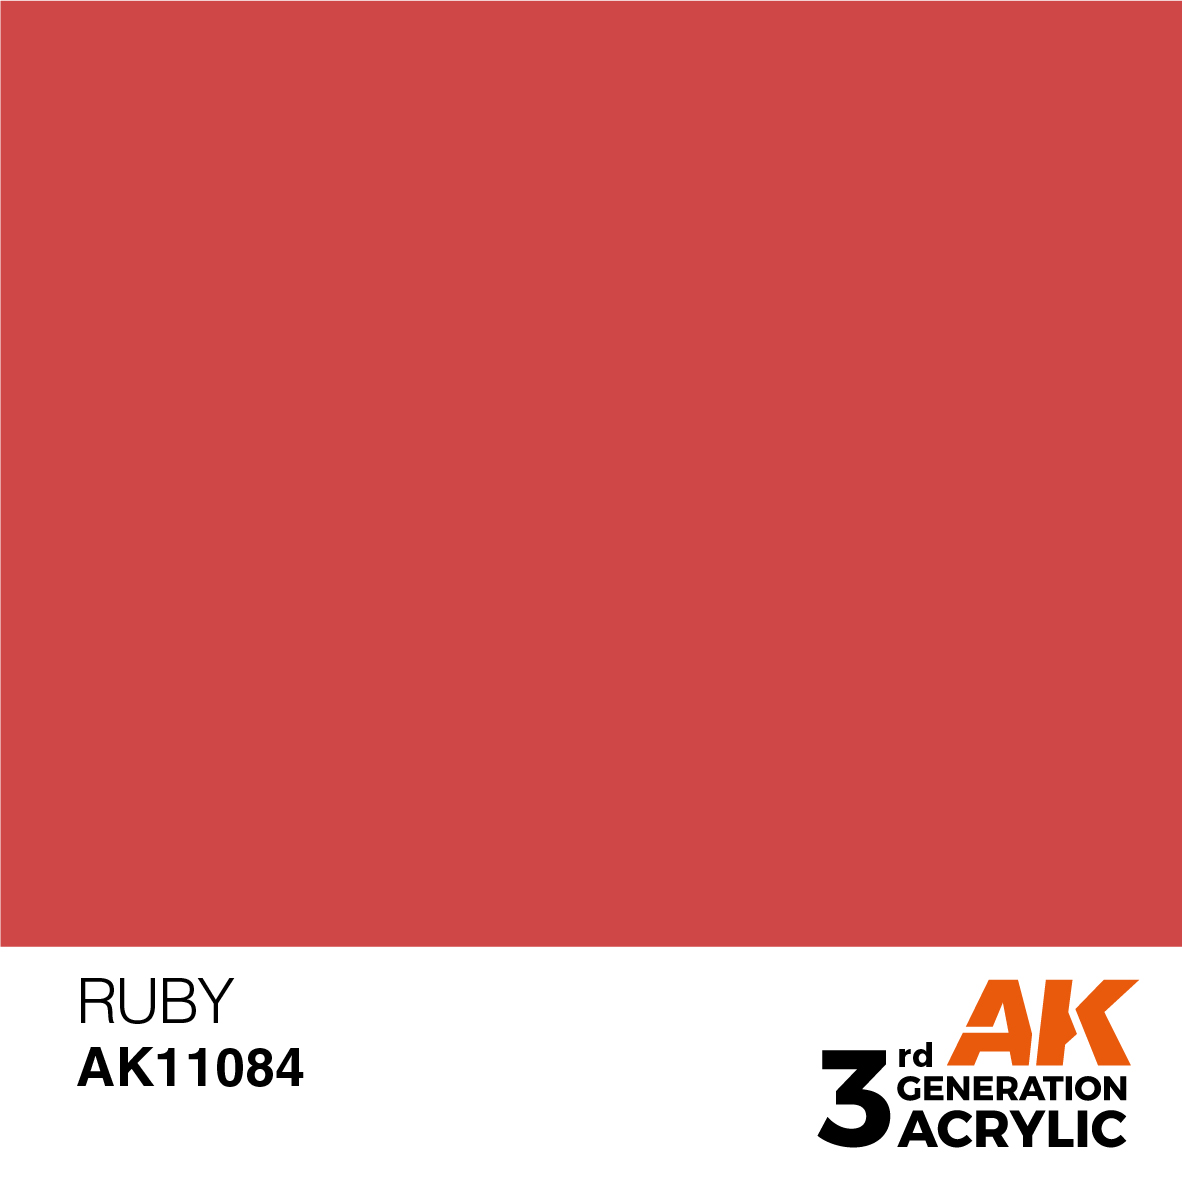 RUBY – STANDARD